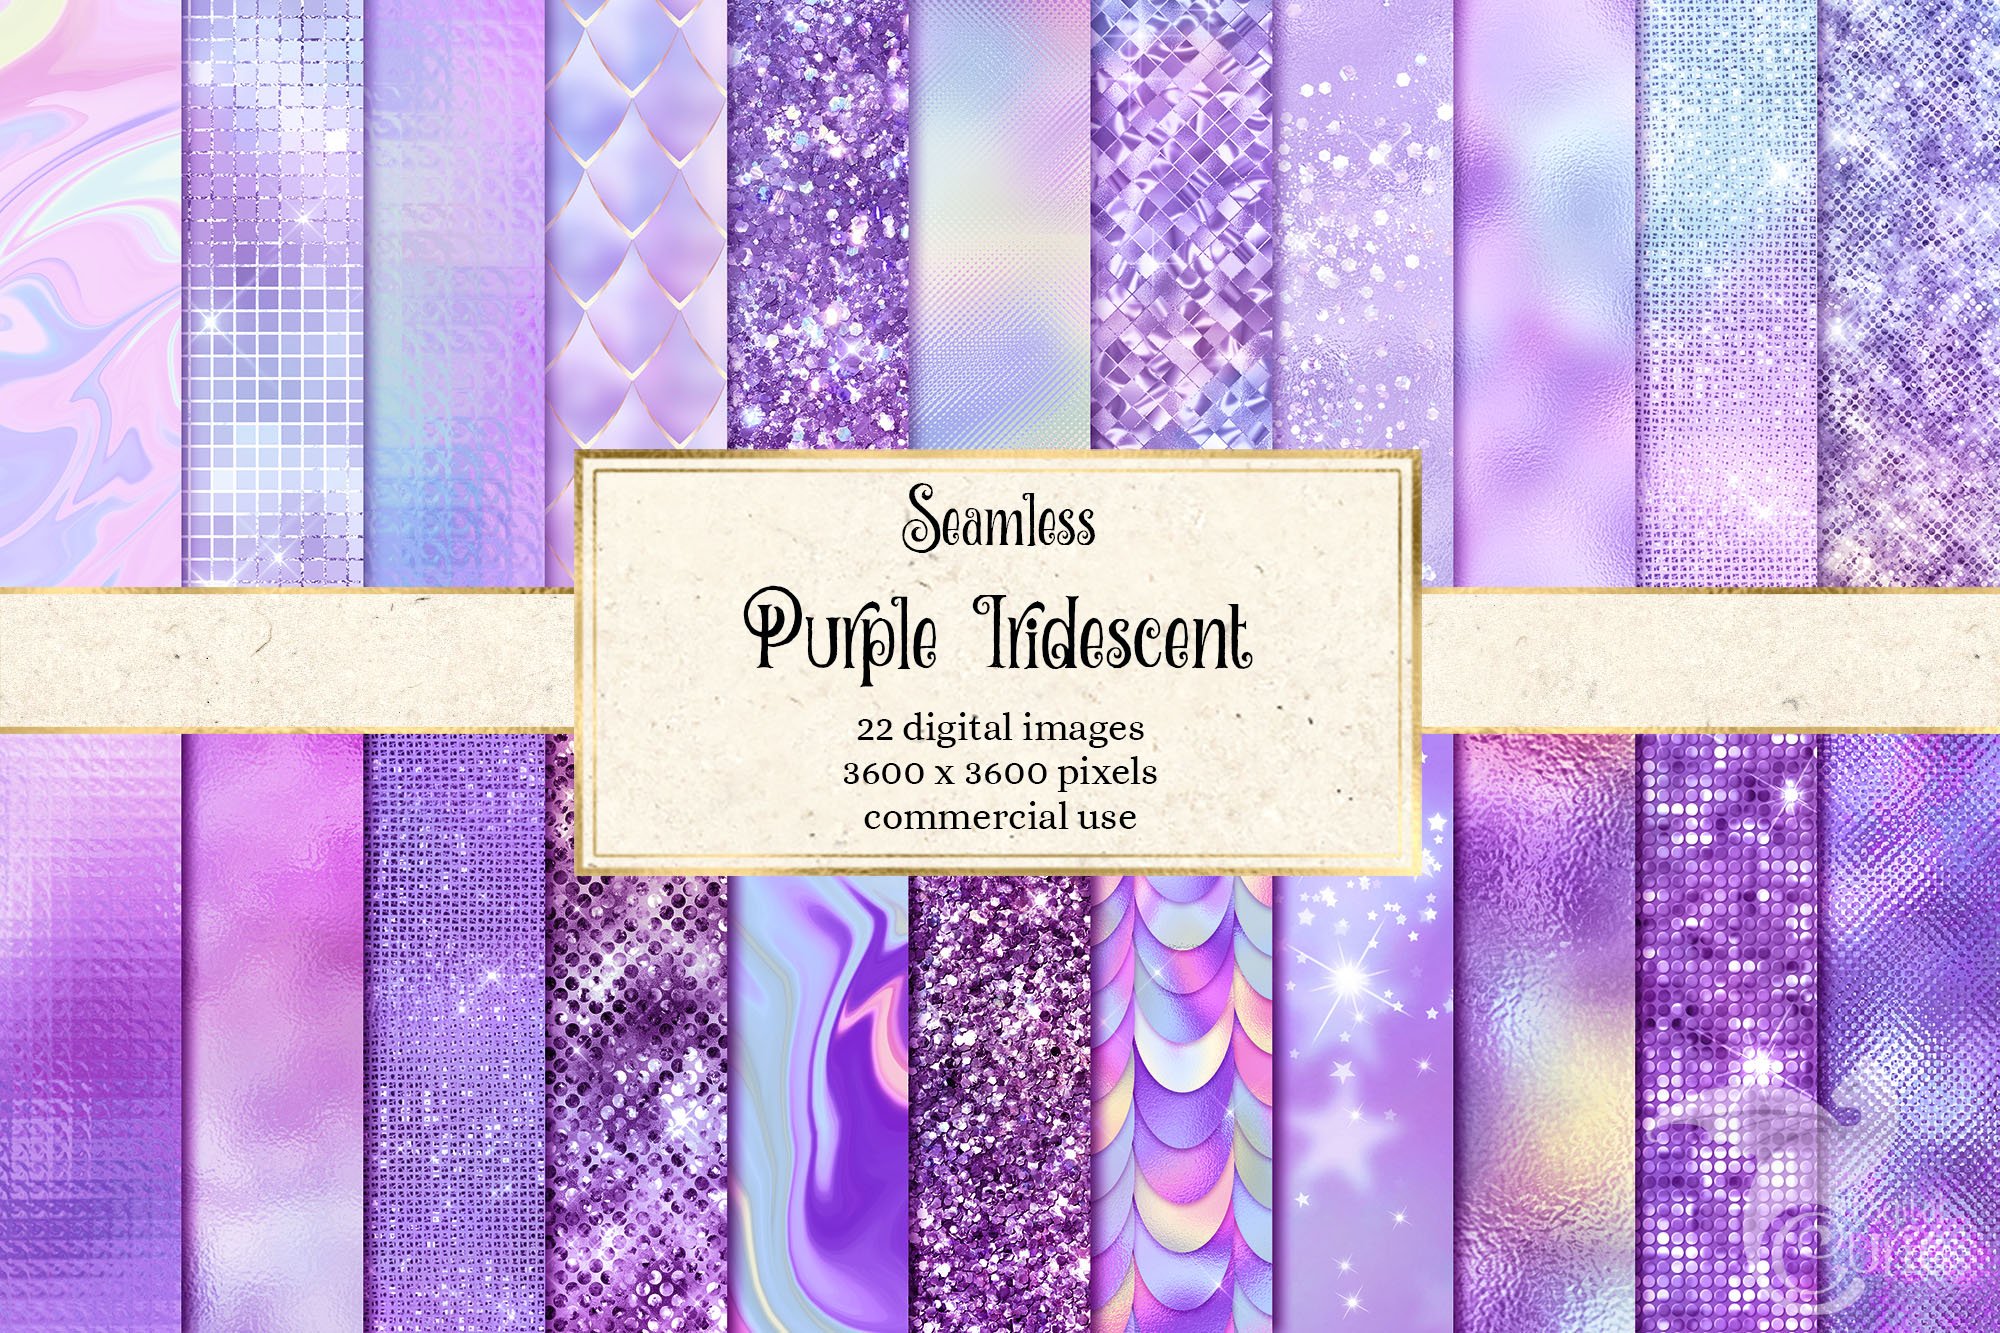 Purple Iridescent Textures cover image.